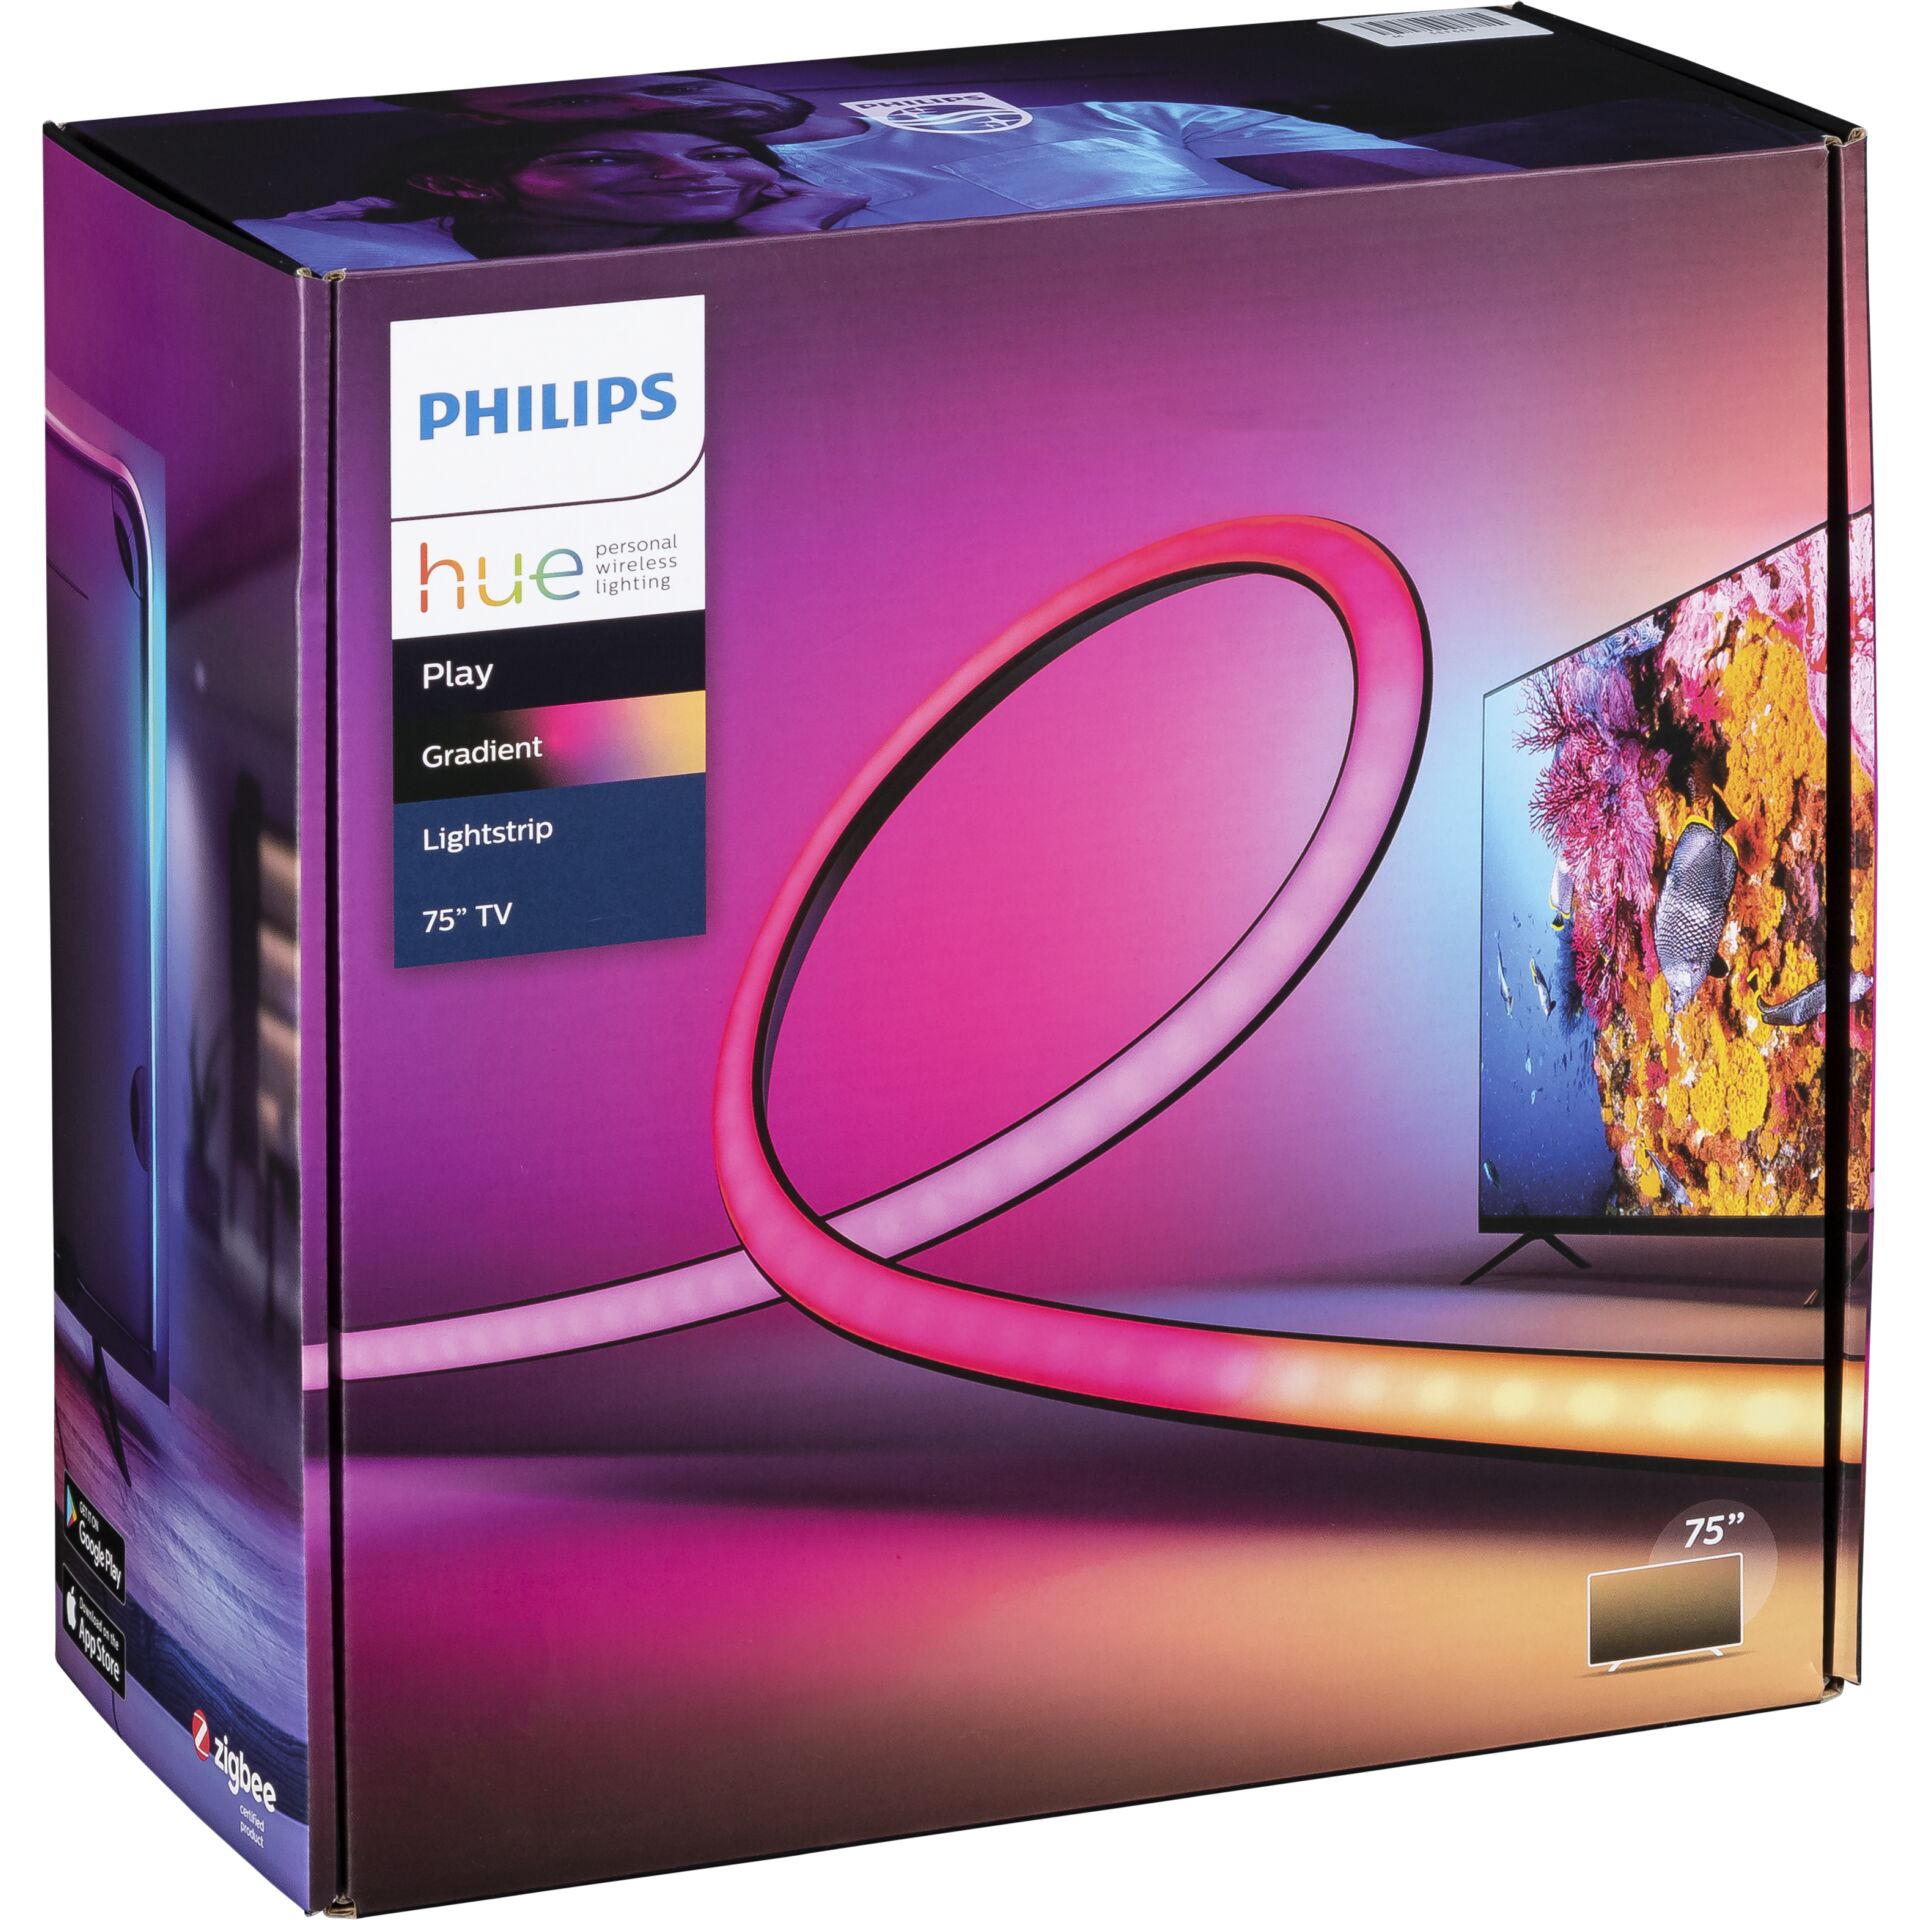 Philips Hue Play Gradient LED Lightstrip TV 75 Inch